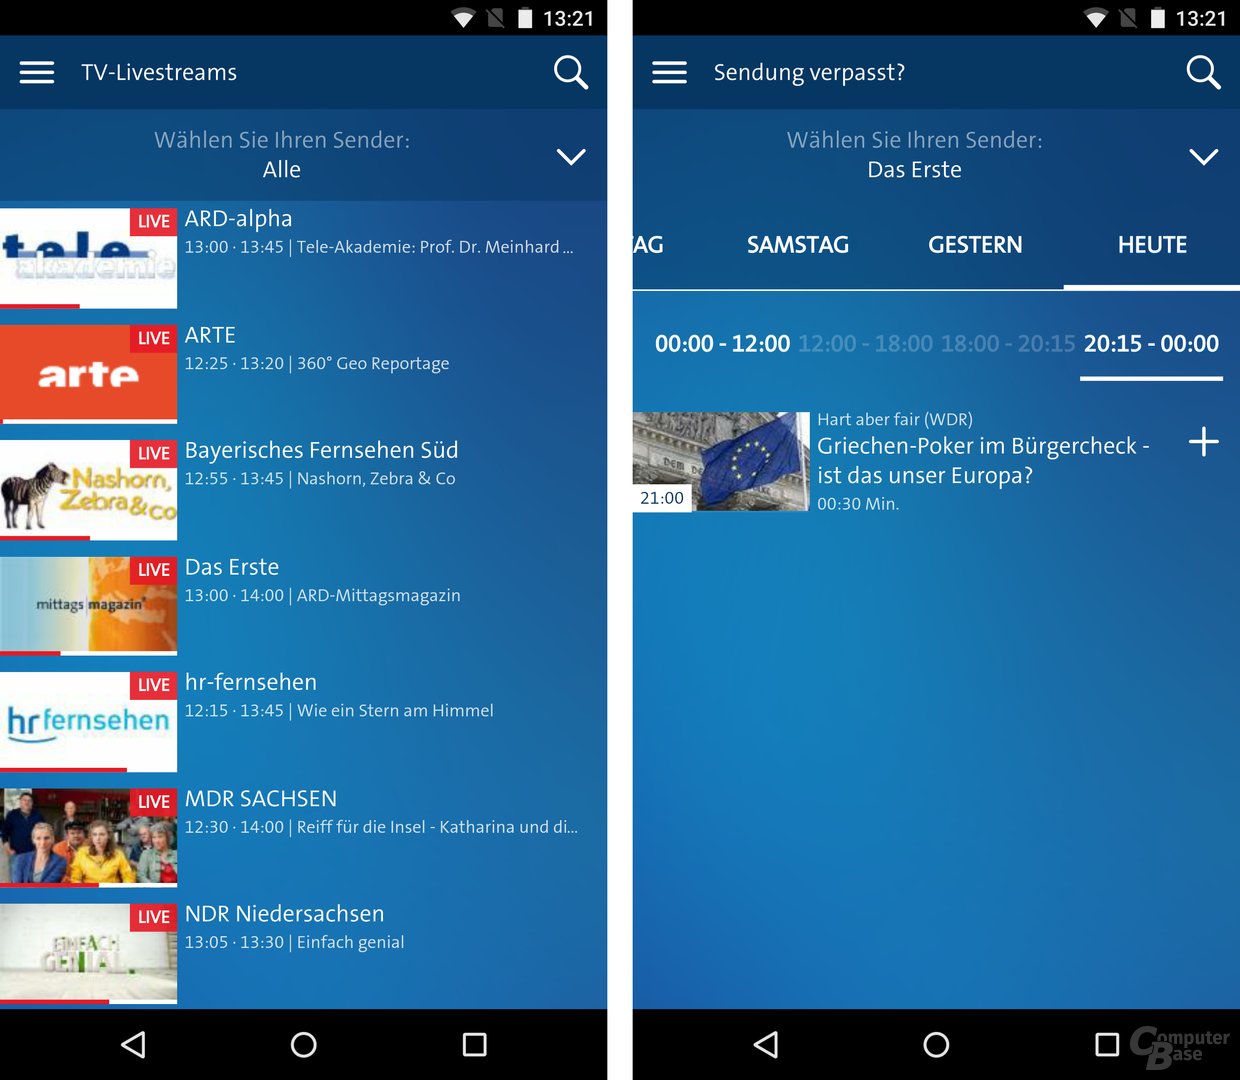 Android-App der ARD Mediathek